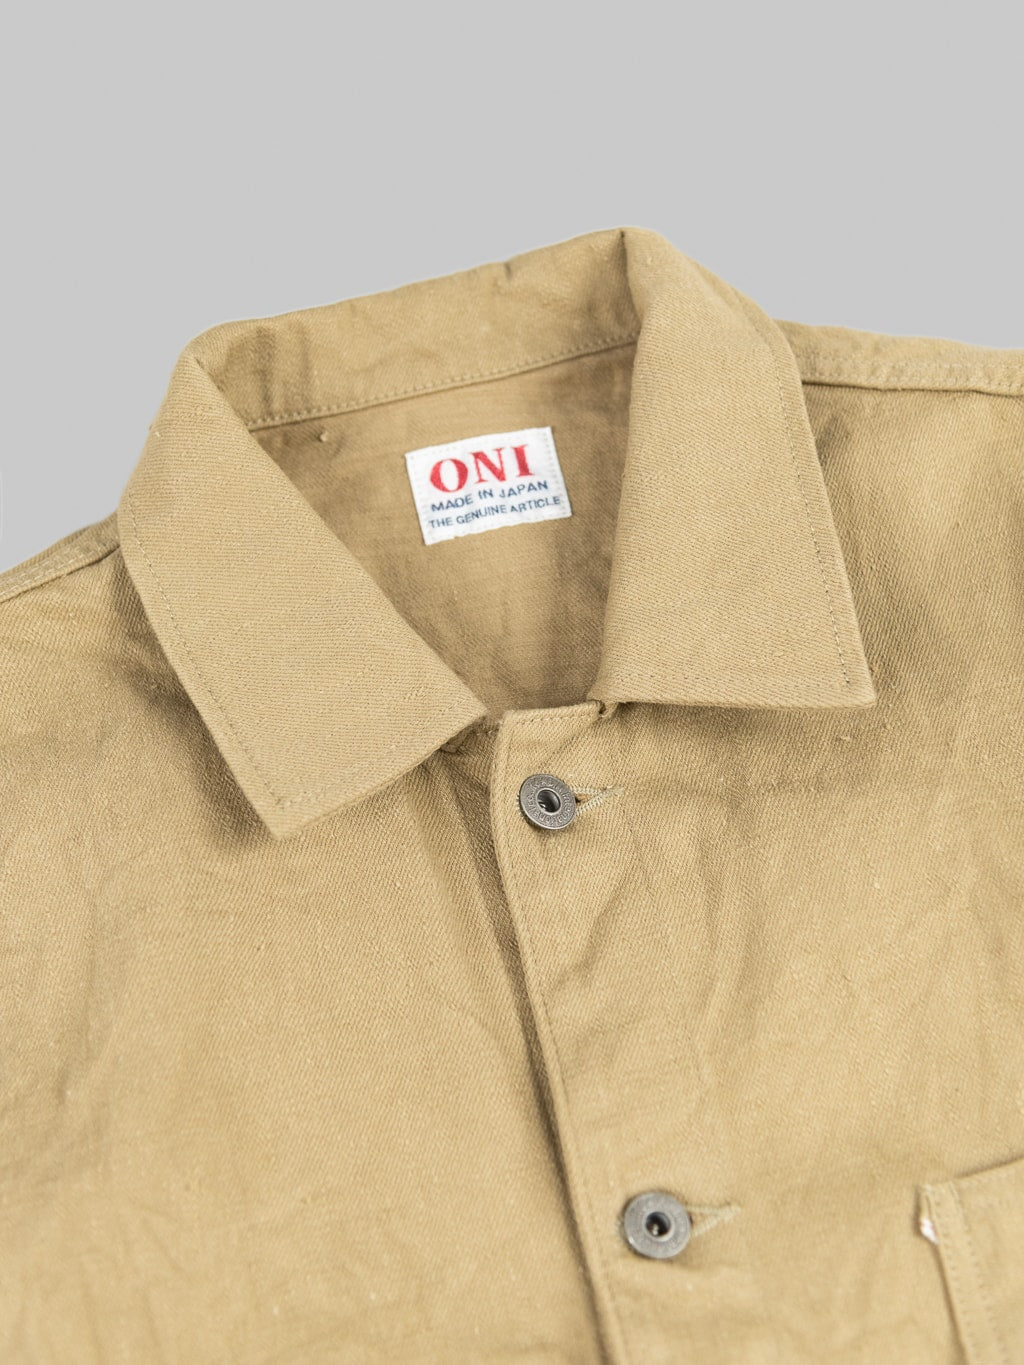 ONI Denim 03501 Sulfur Coverall Jacket Khaki Beige buttoned collar